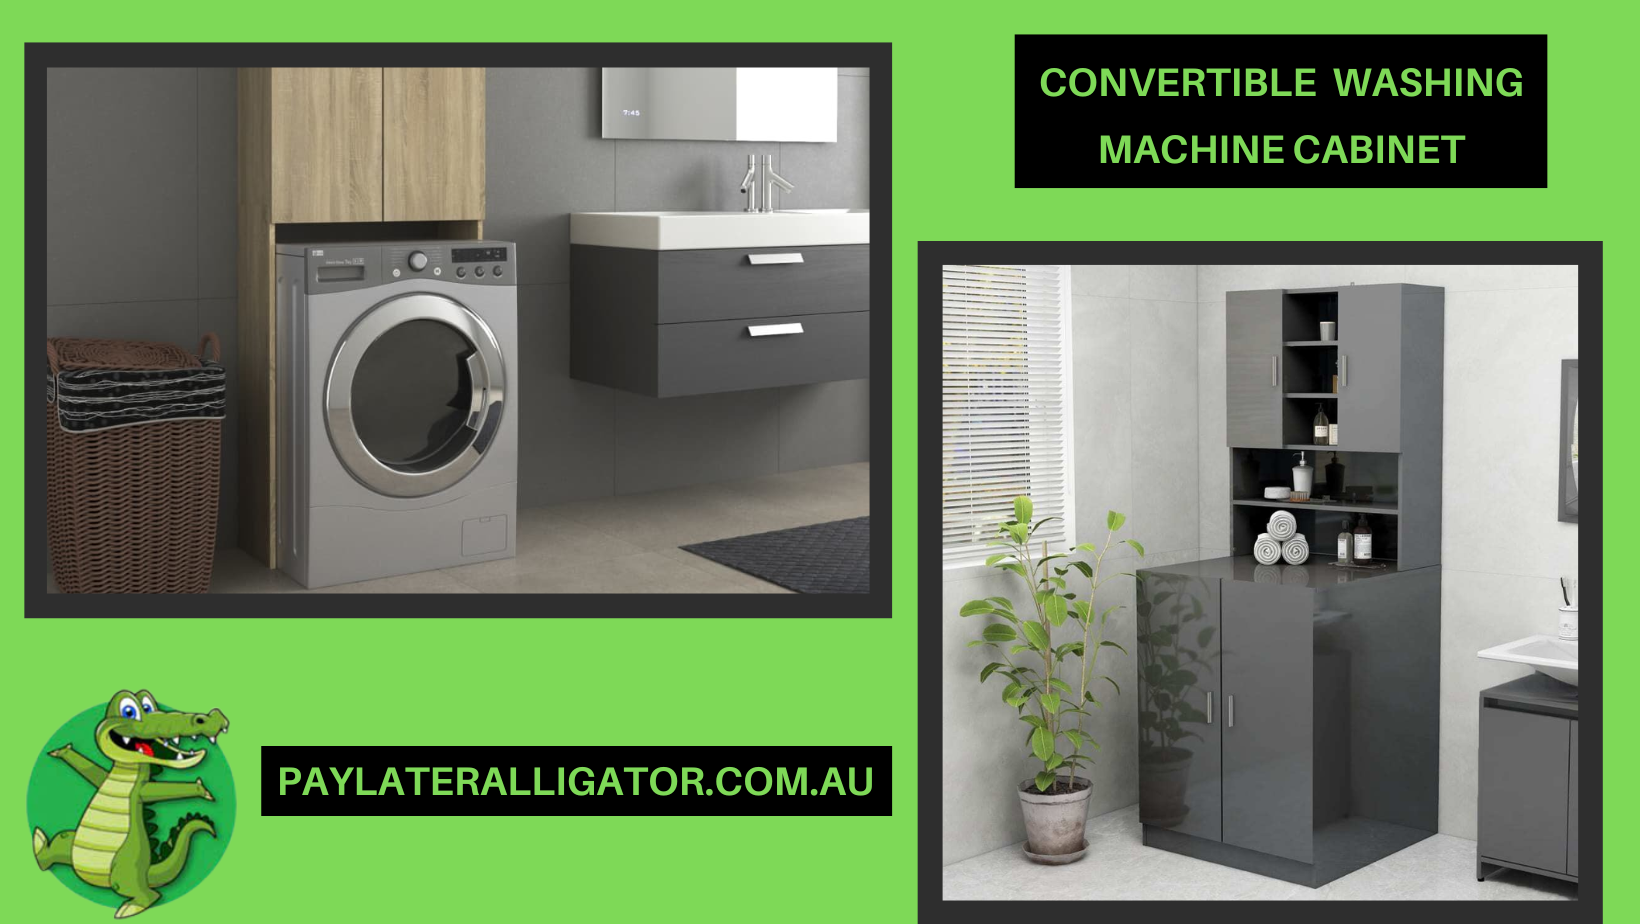 Convertible washing machine cabinet